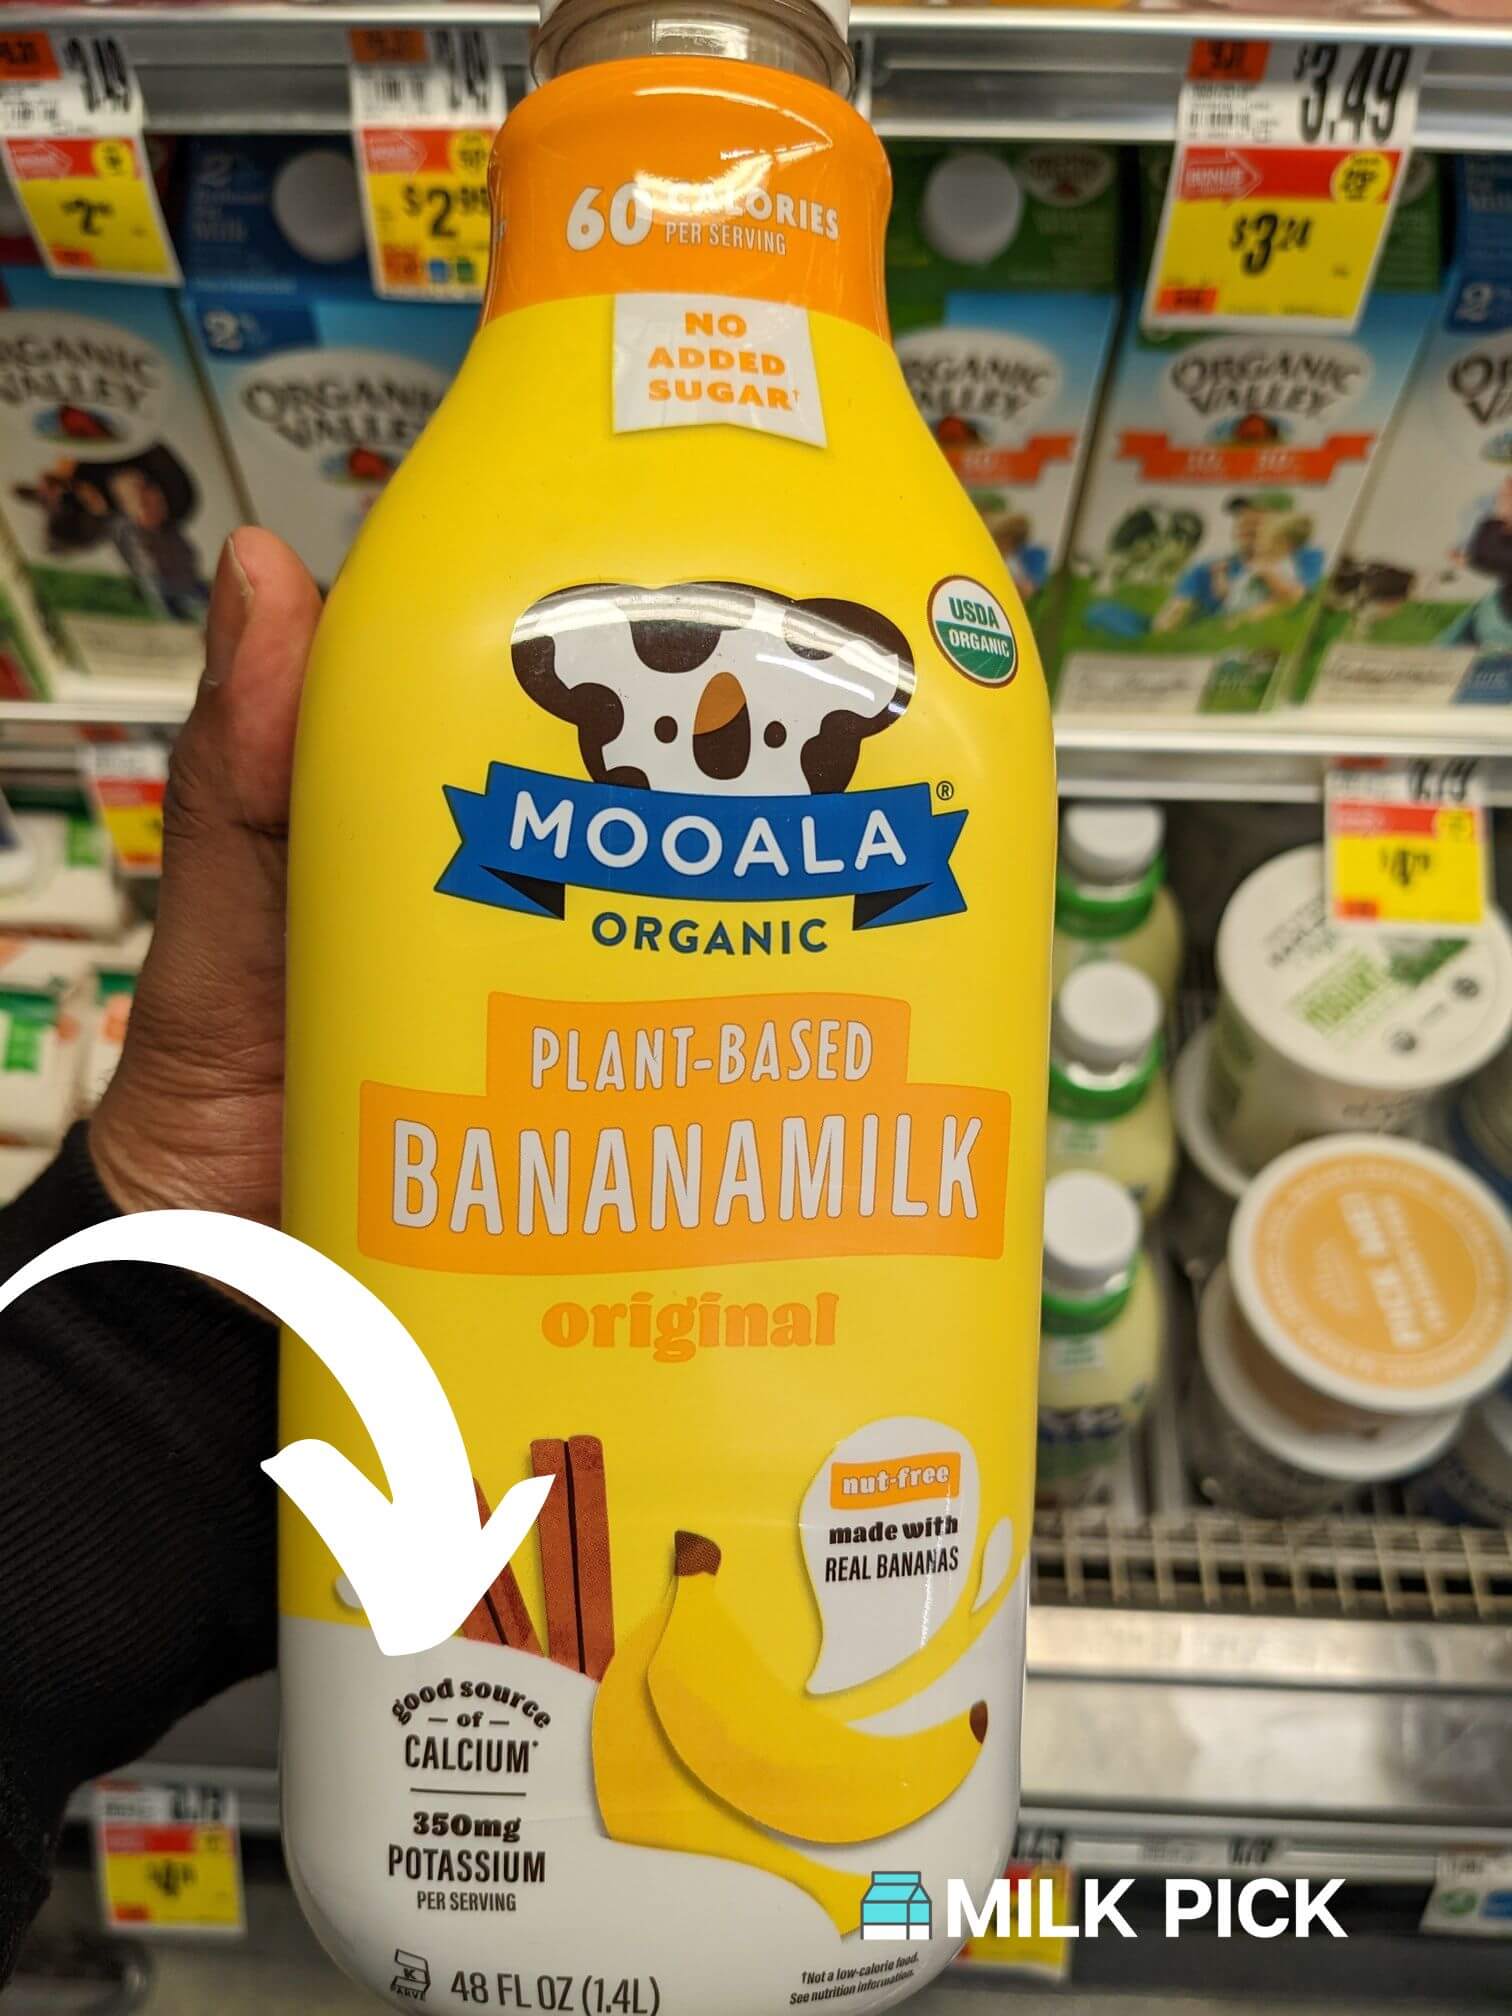 mooala banana milk with arrow pointing to calcium and potassium